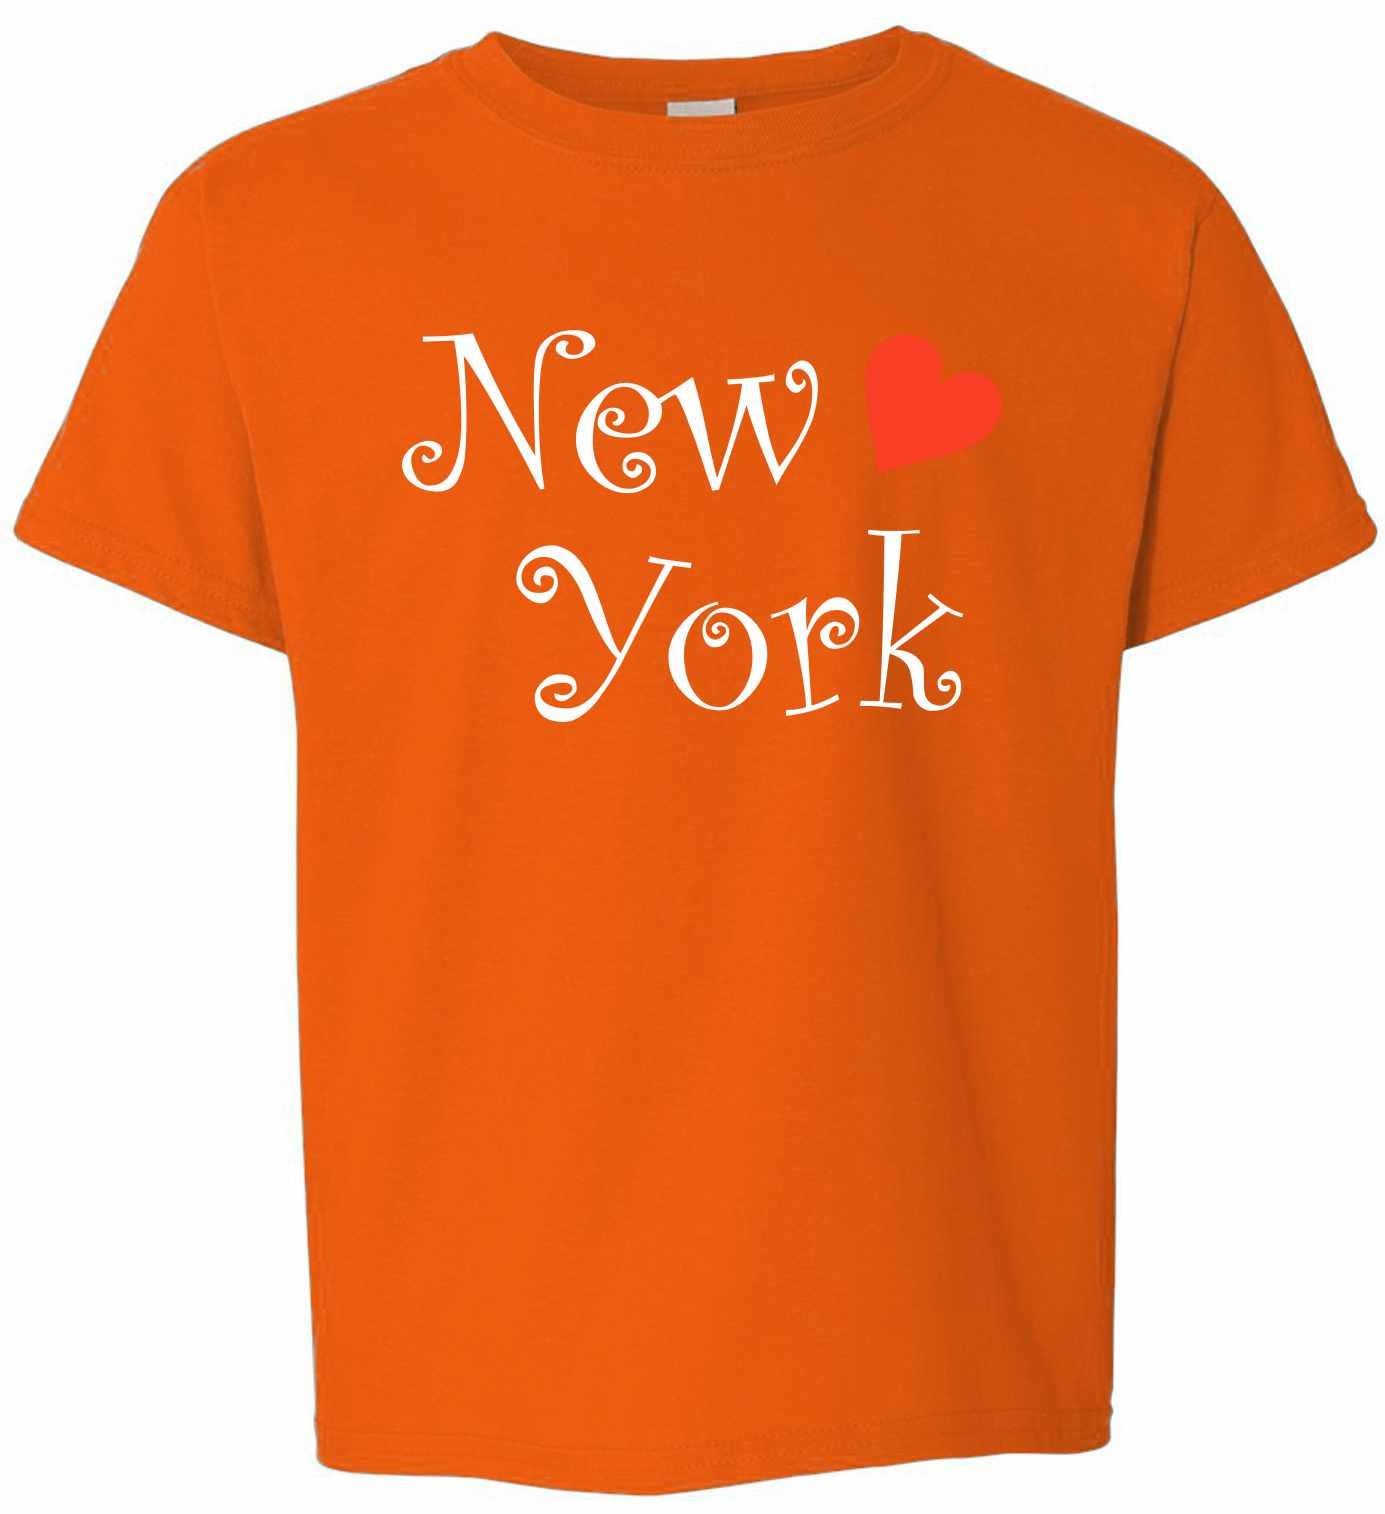 New York on Kids T-Shirt (#557-201)